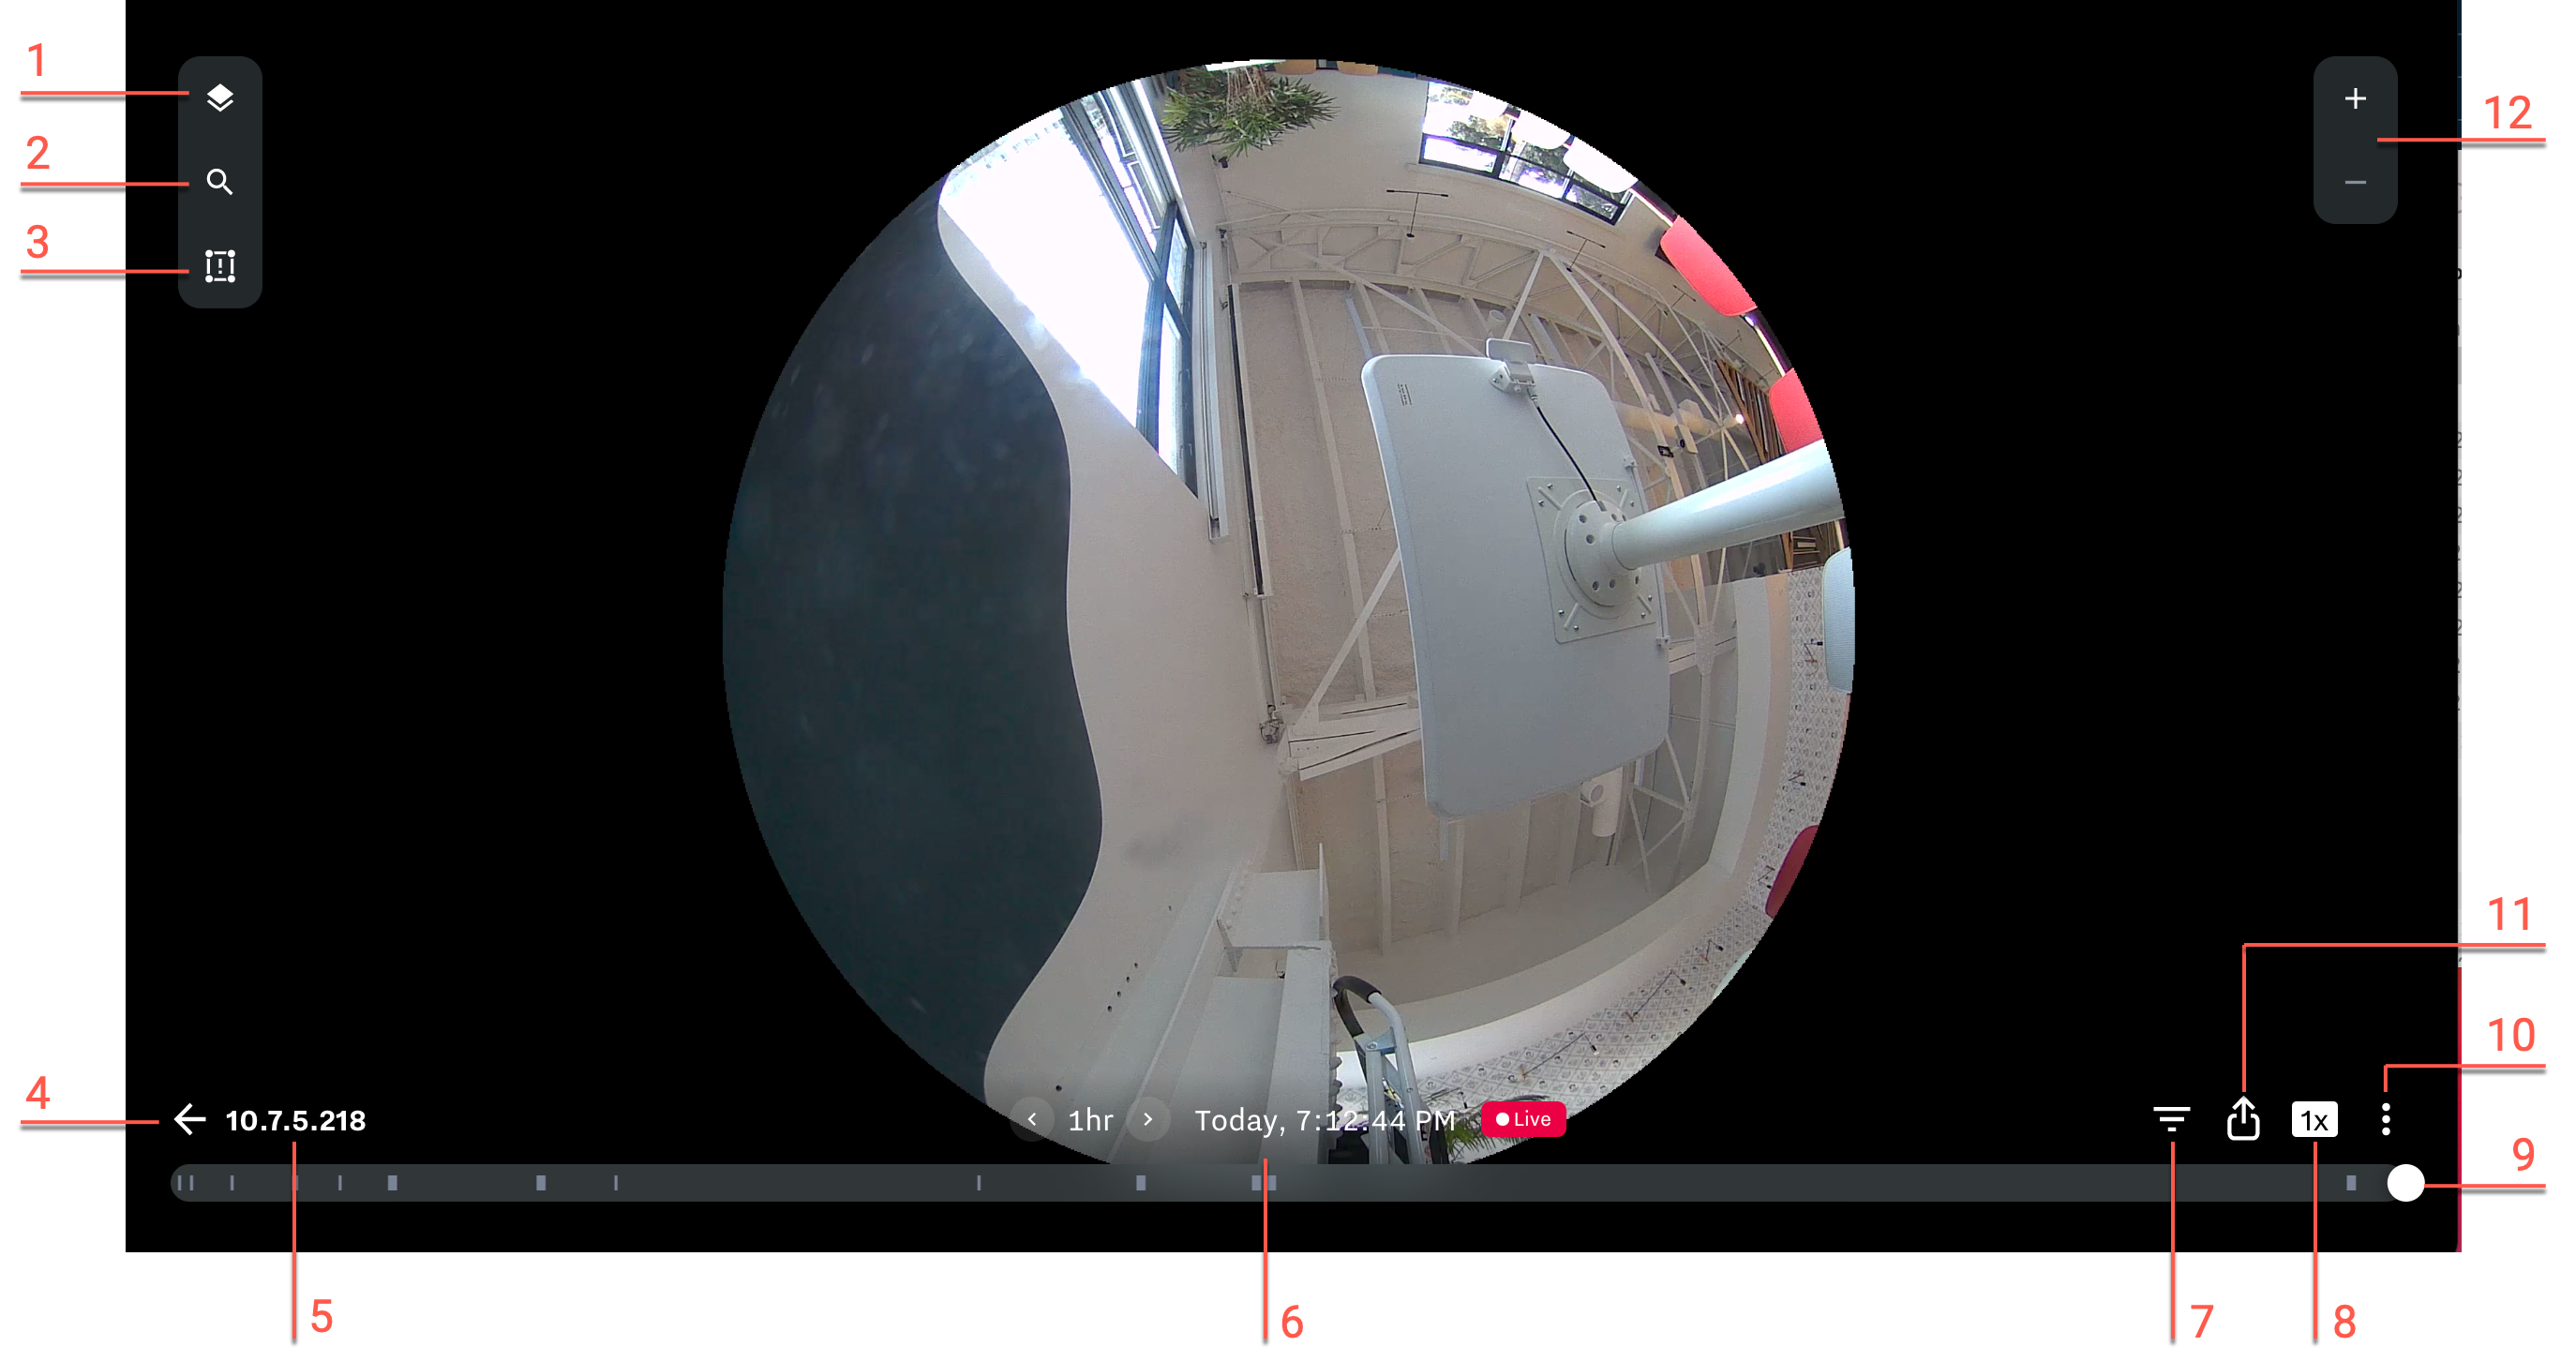 camera-footage-controls.png